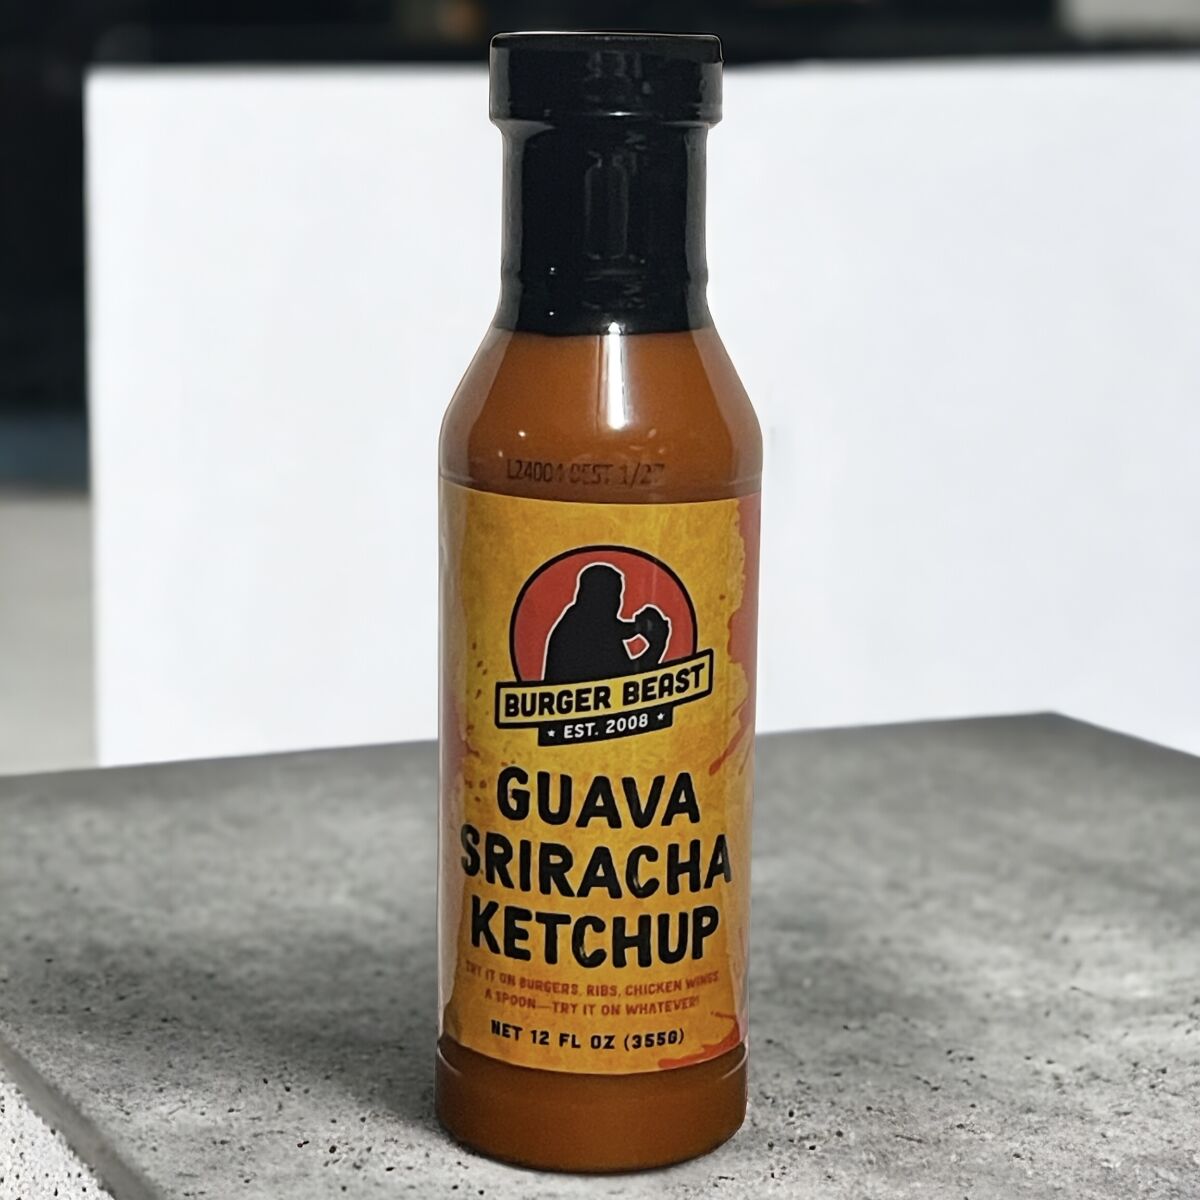 Burger Beast's Guava Sriracha Ketchup